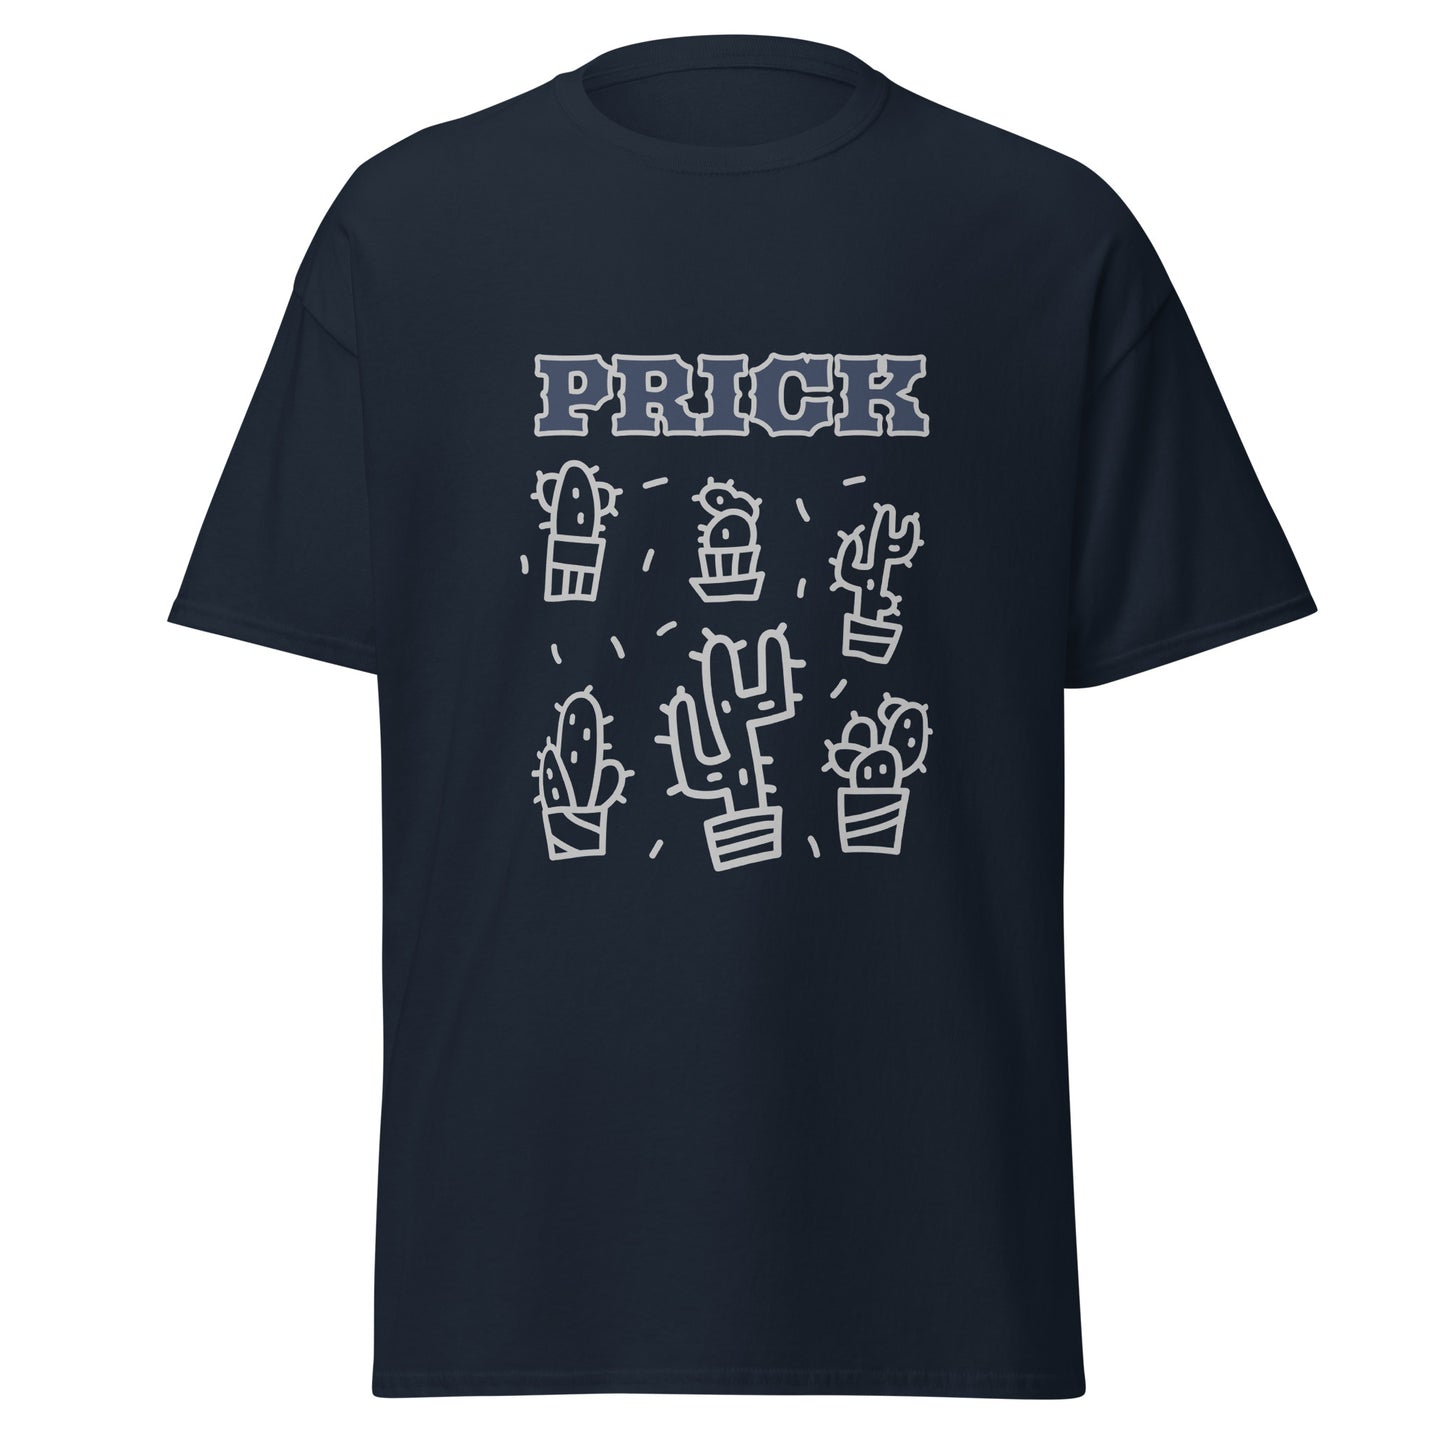 Prick T-Shirt